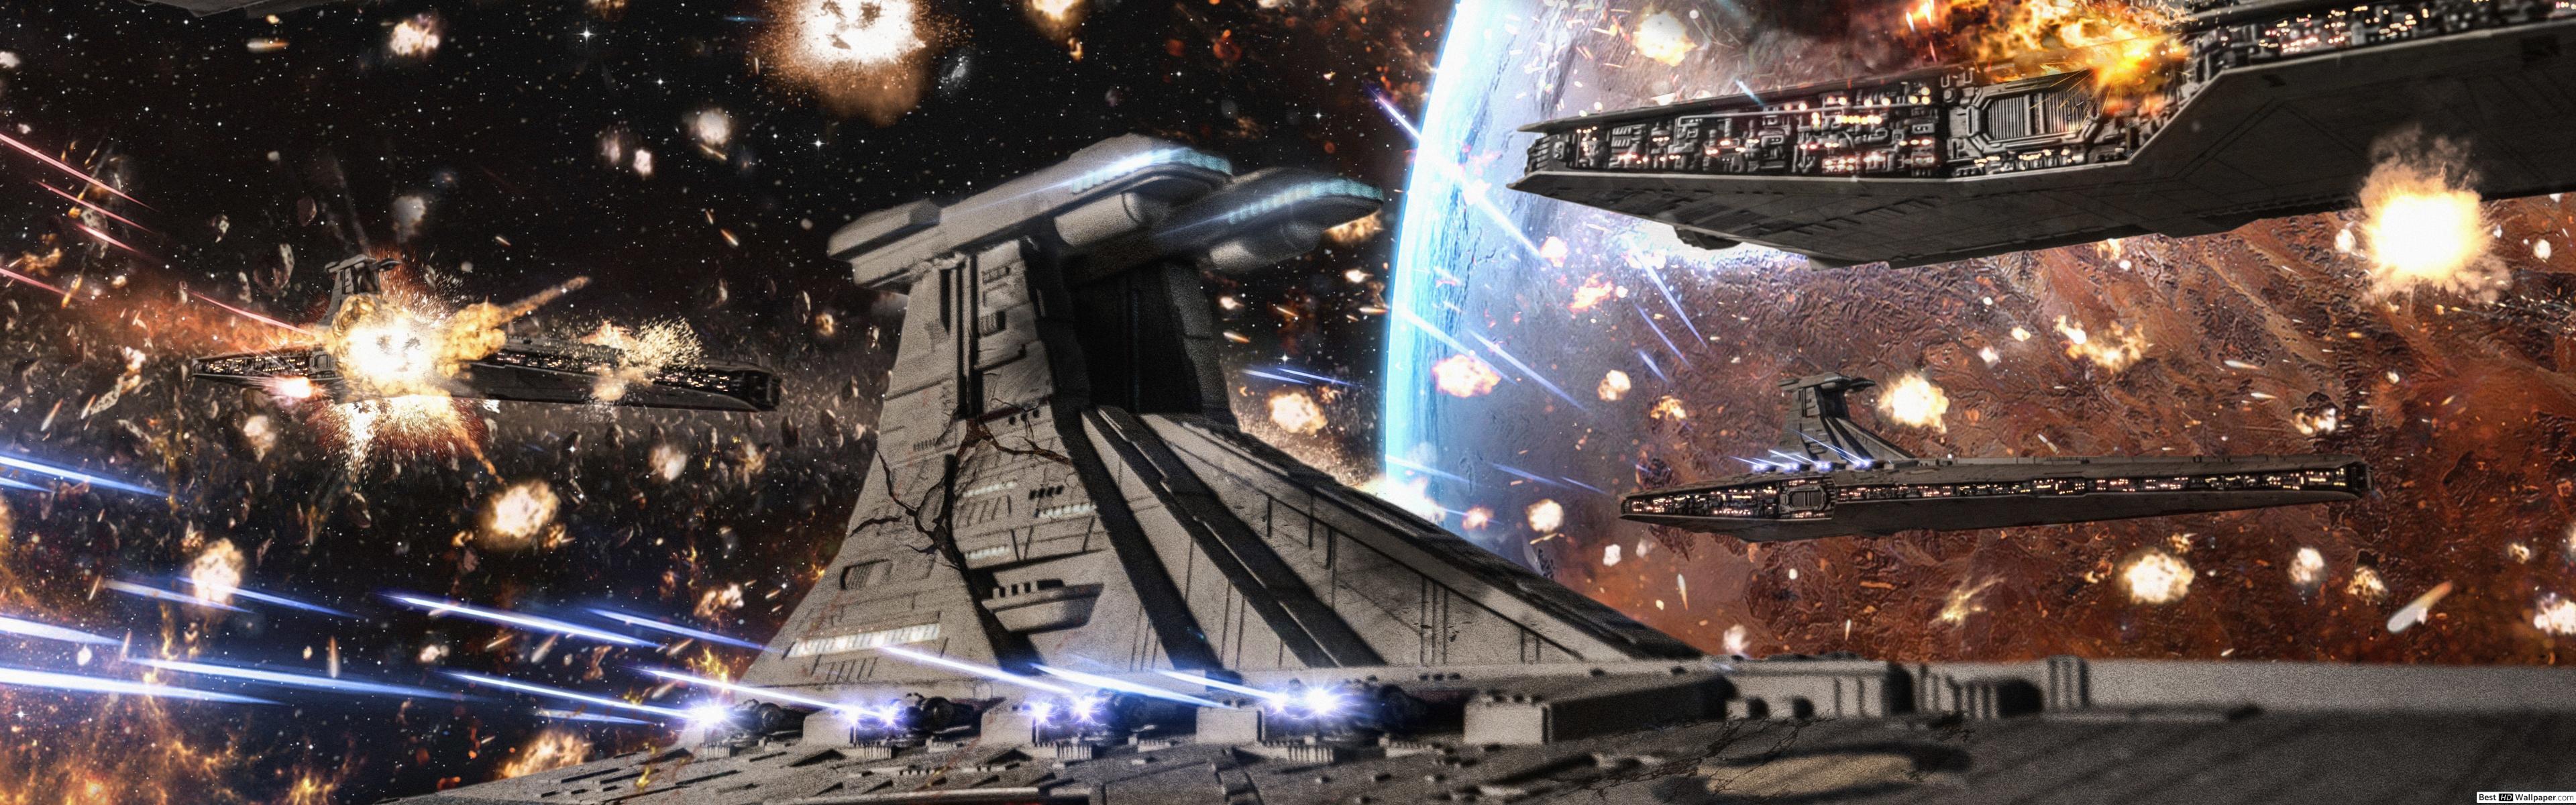 Star Wars Ship Wallpaper HD